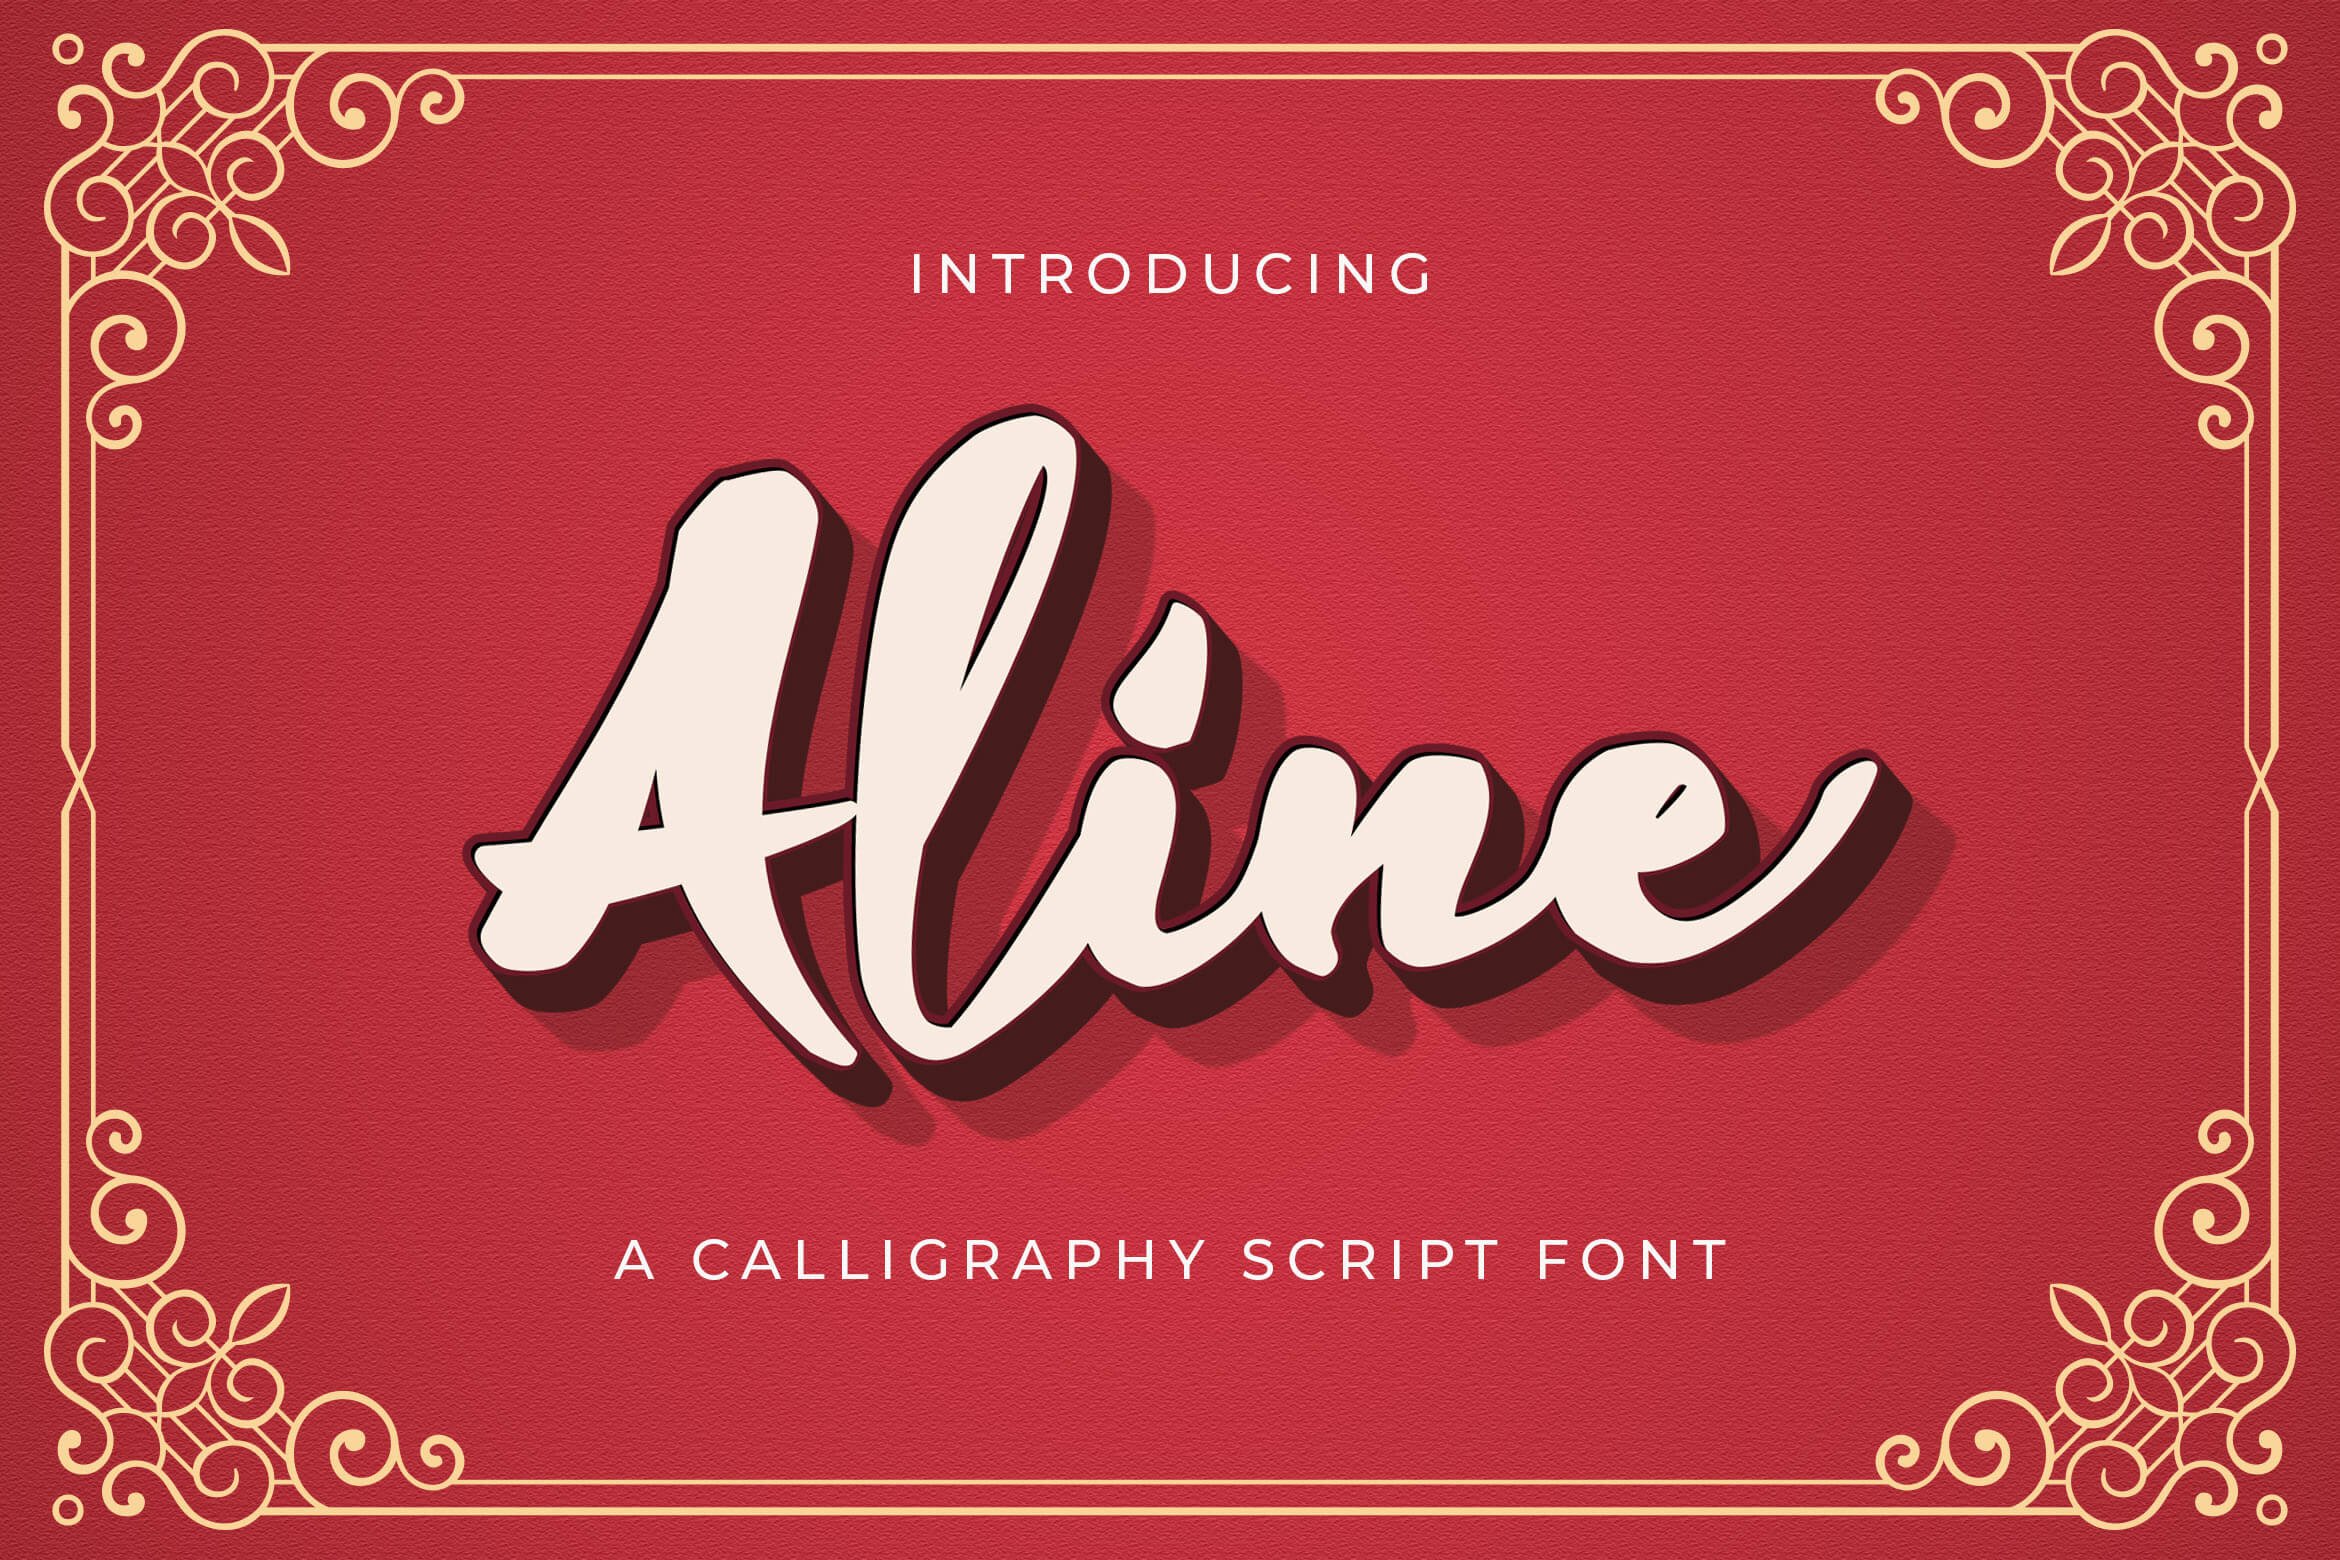 Aline - Handwritten Font cover image.